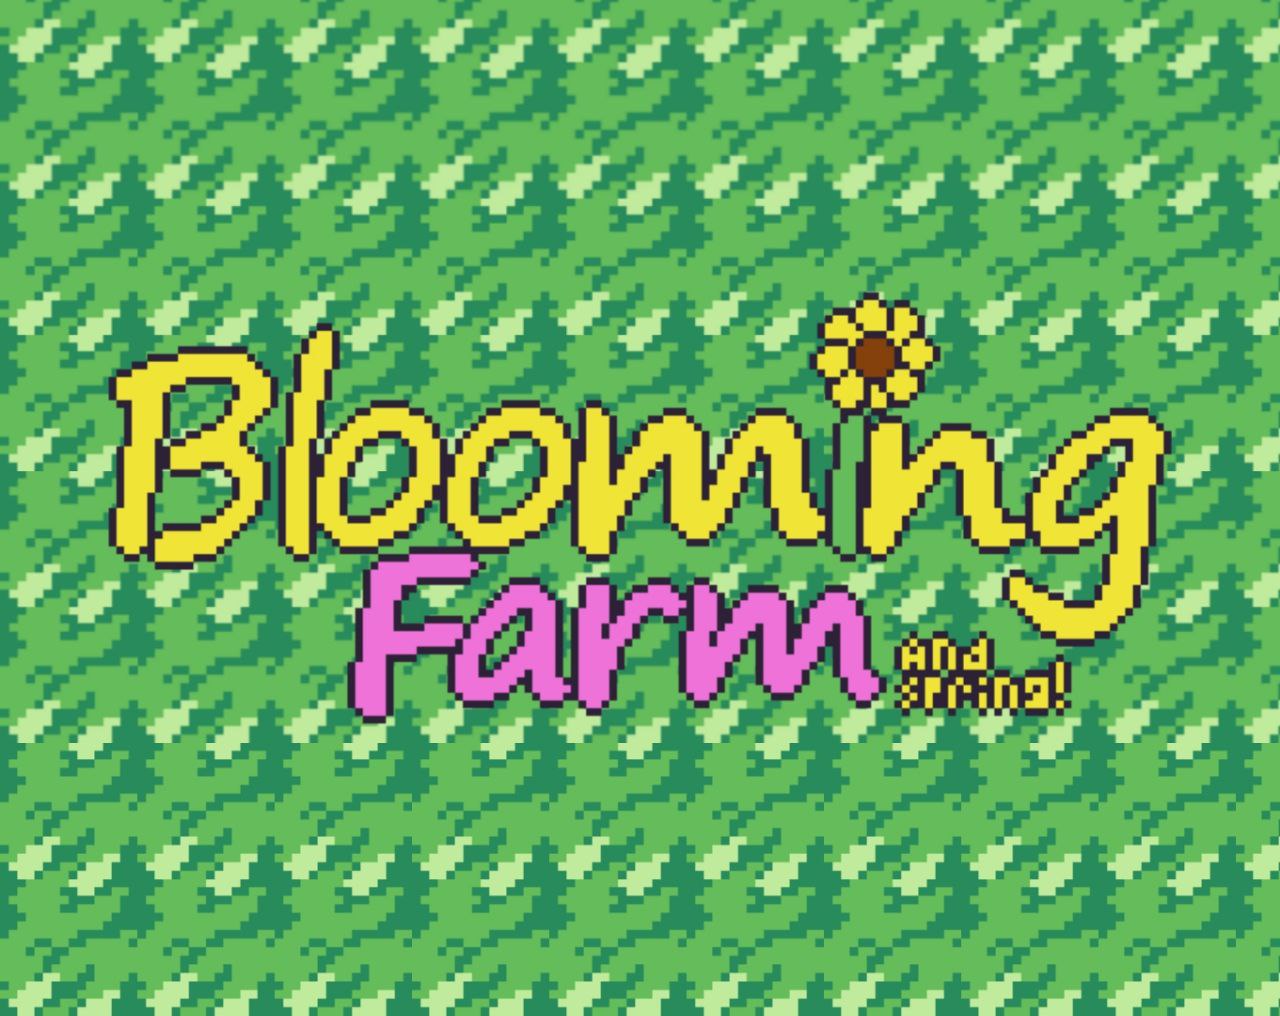 blooming farm